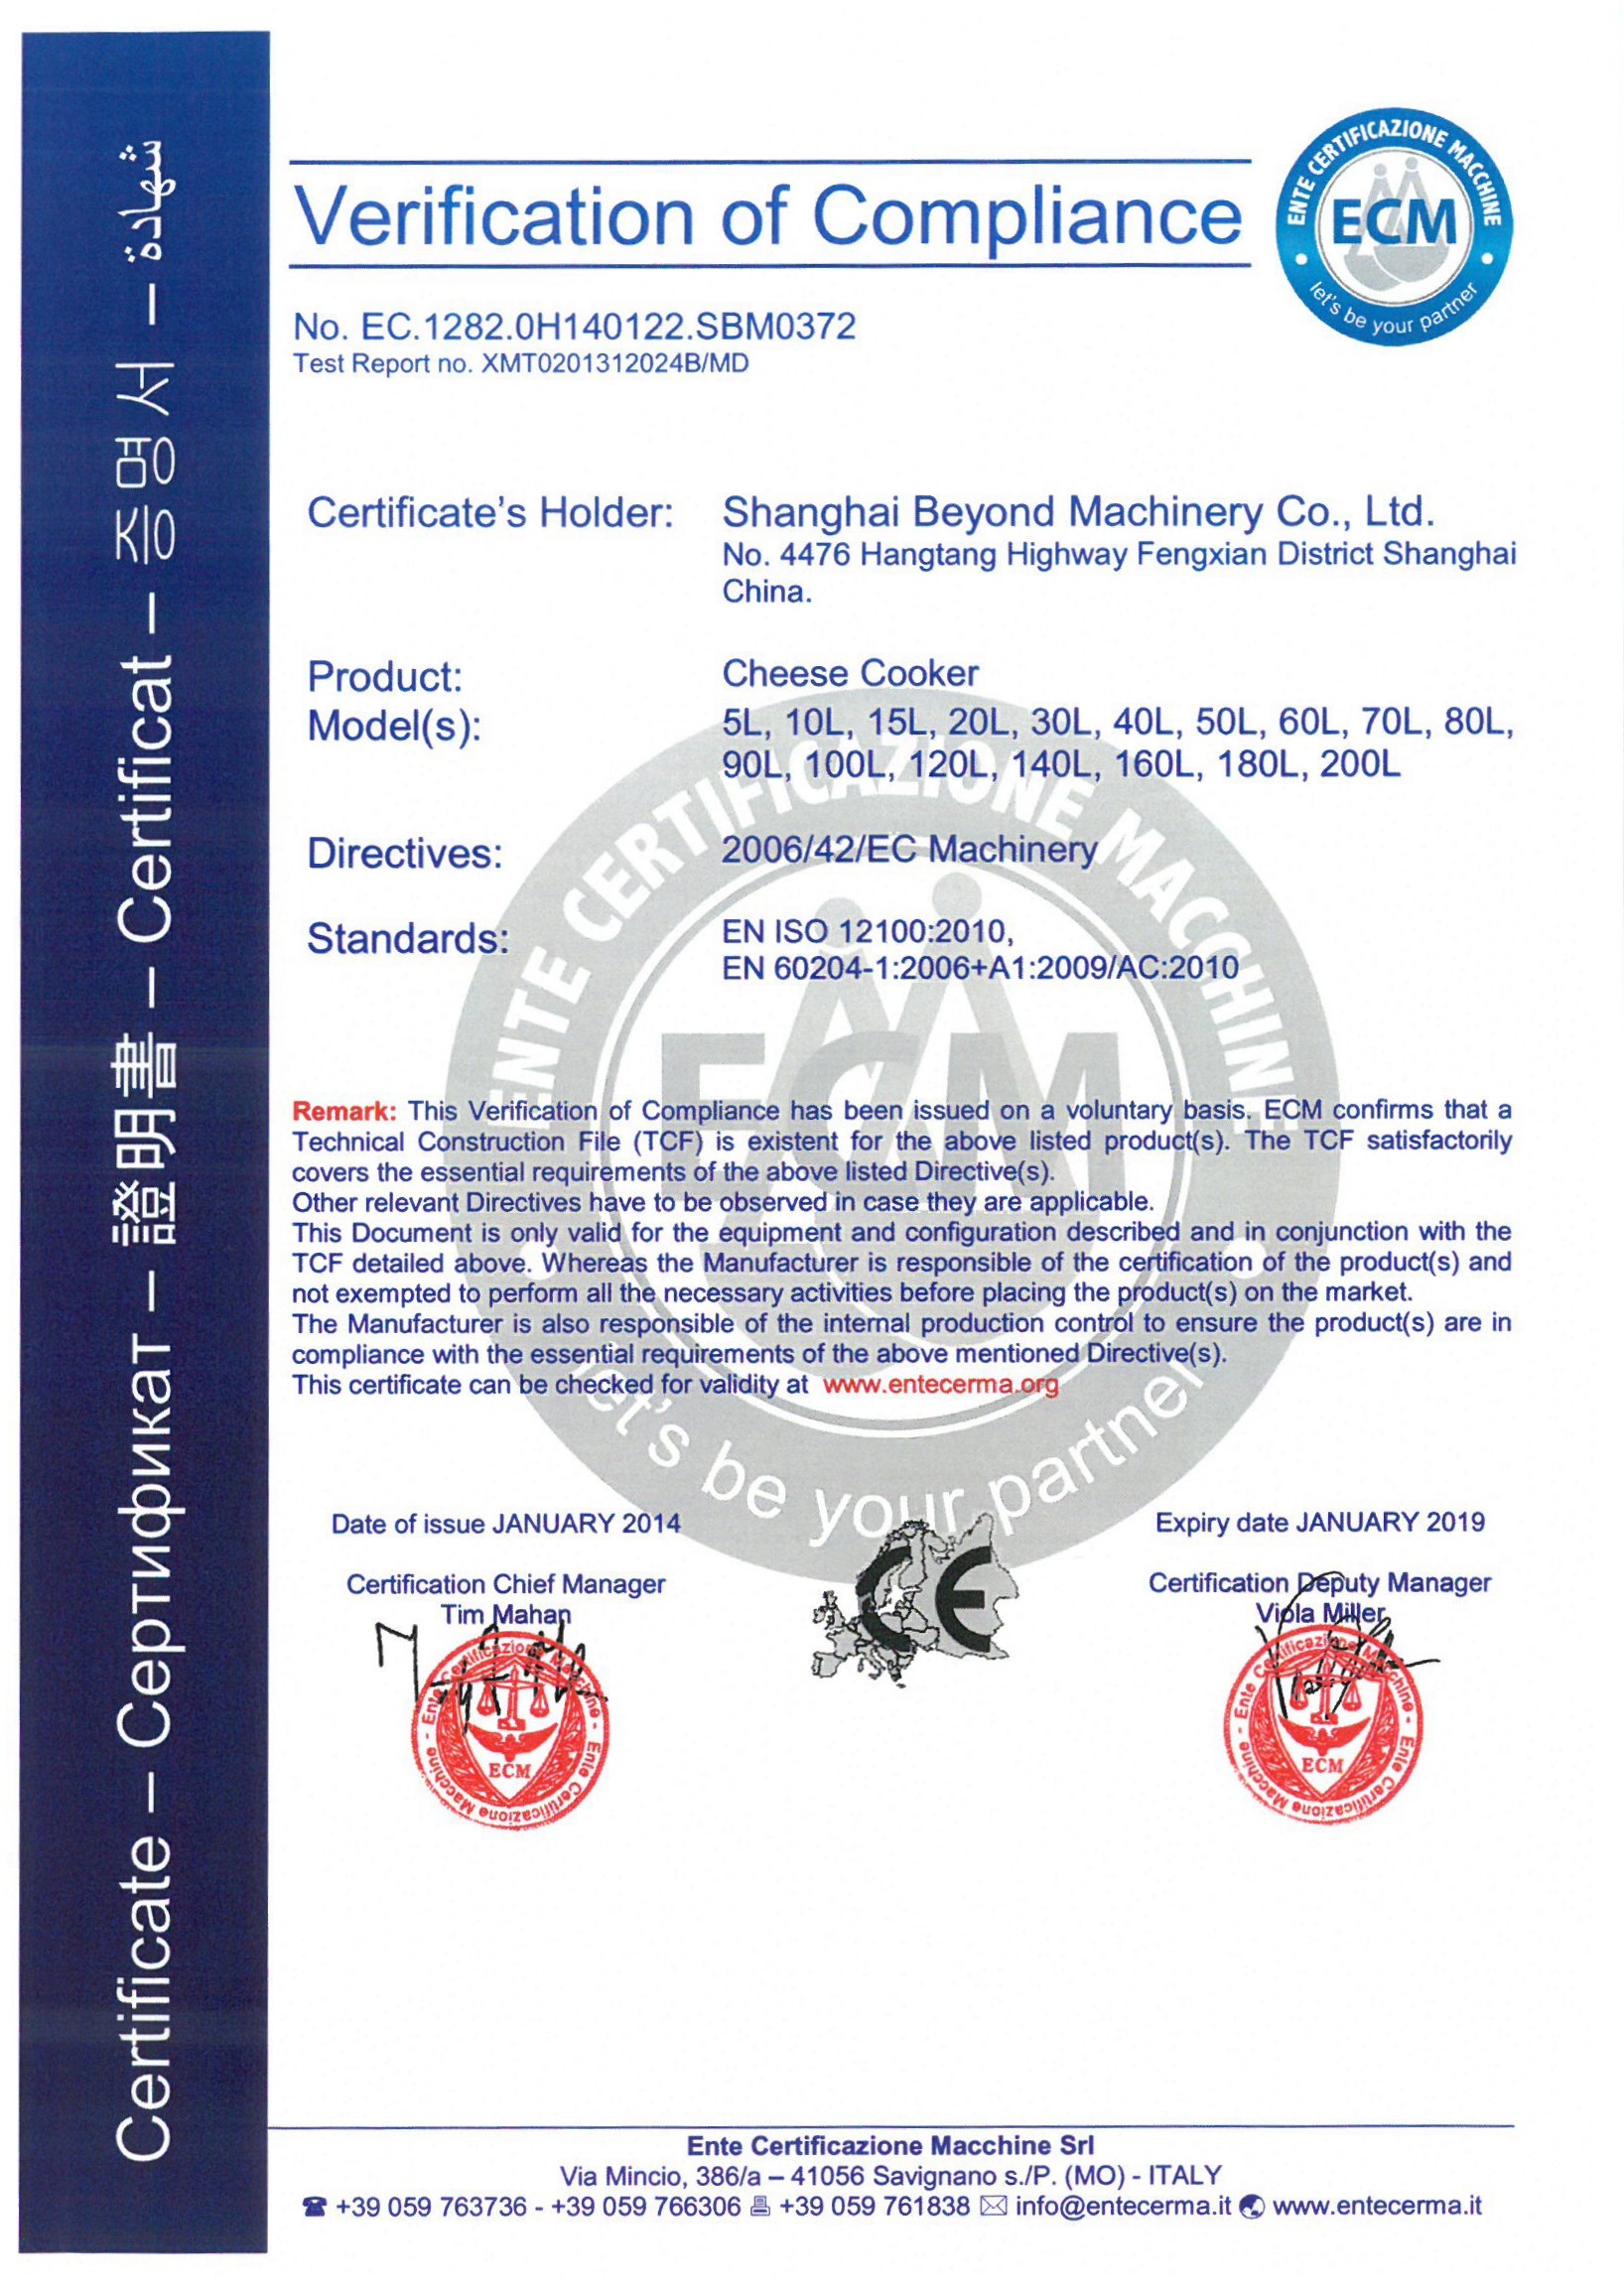 Shanghai Beyond Machinery Co., Ltd Certifications